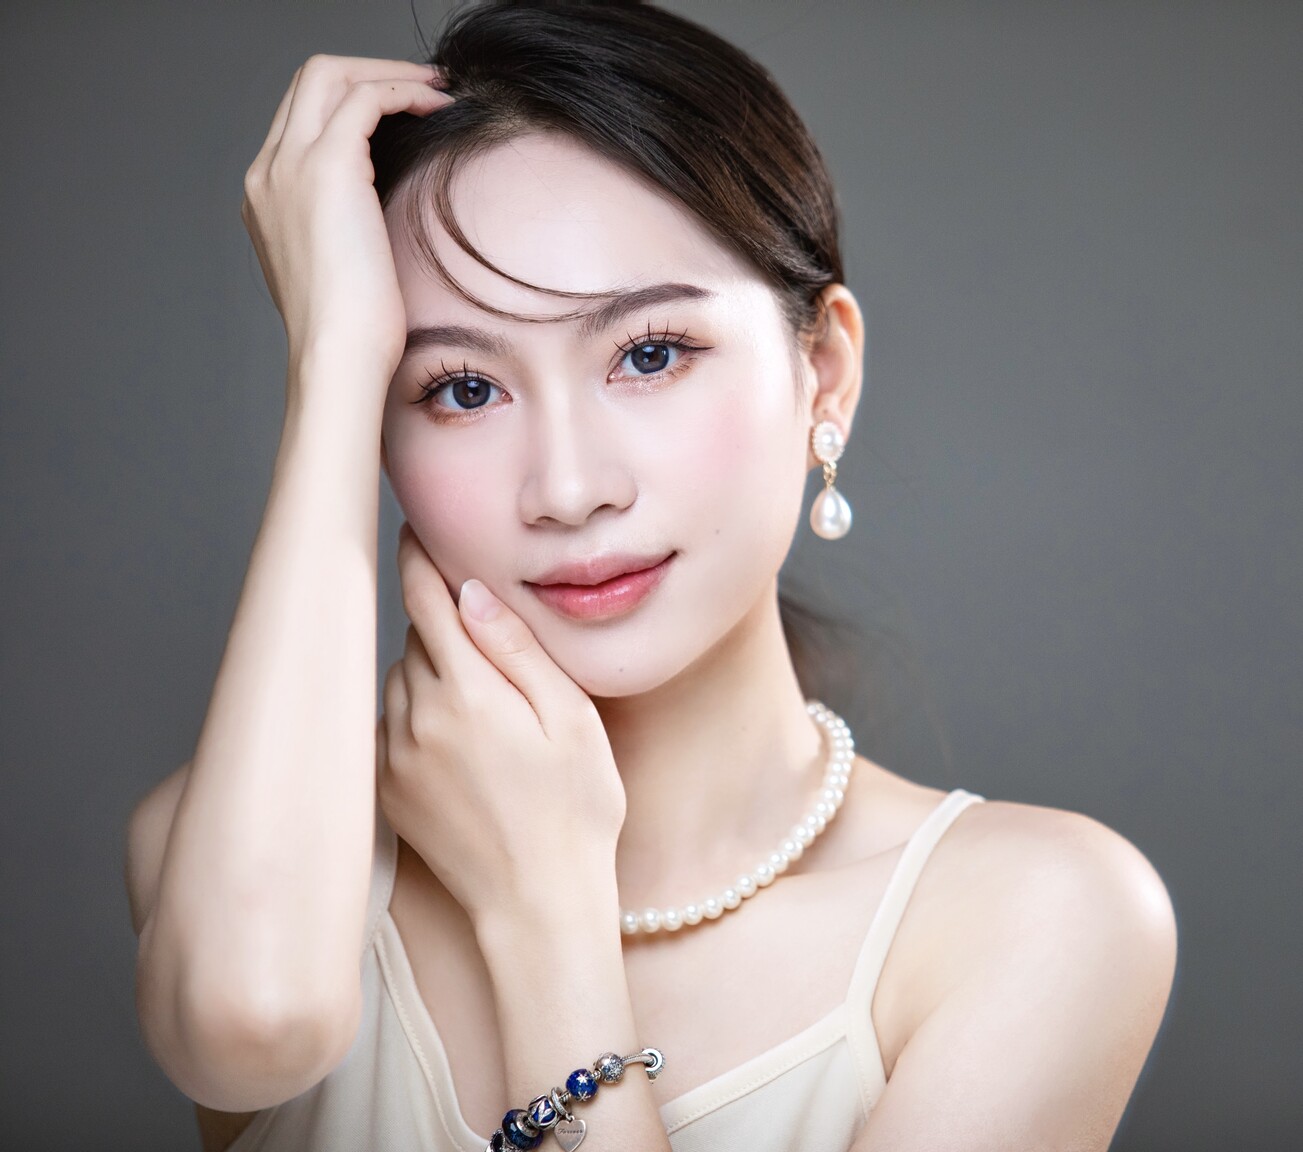 Deng Fei Jun chicas rusas para matrimonio